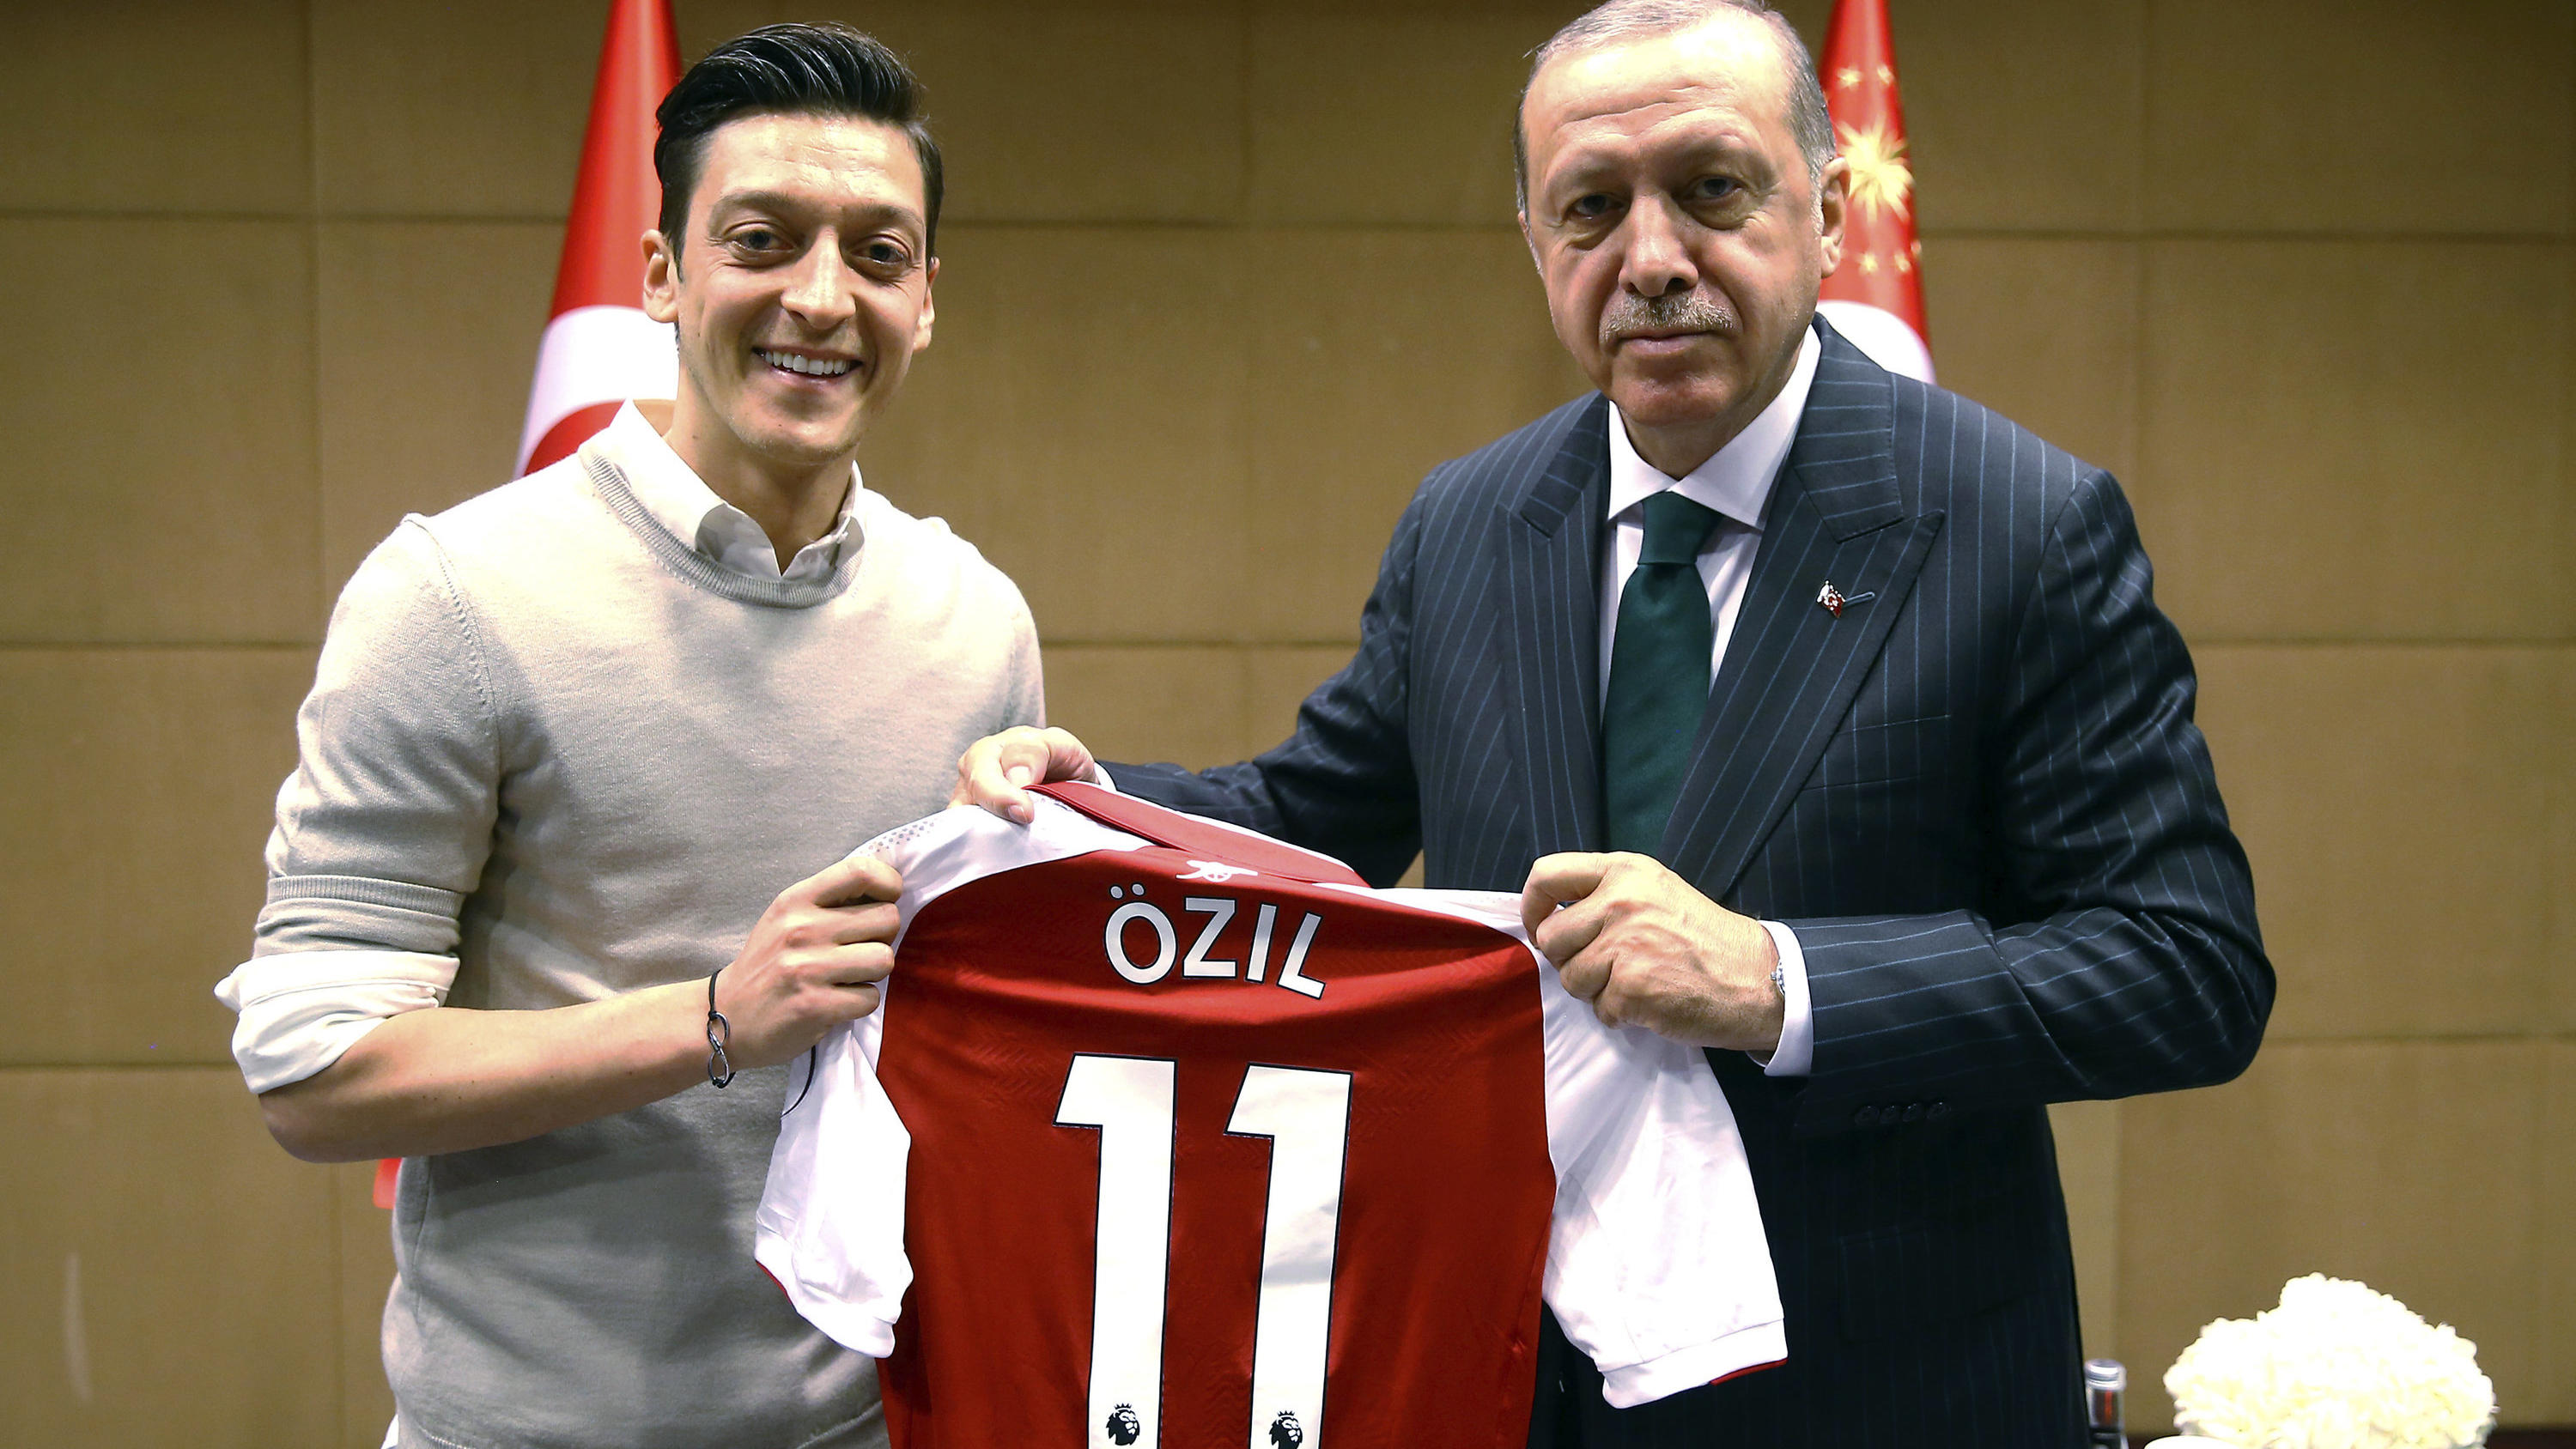 Özil und Erdogan posieren mit Özils Trikot